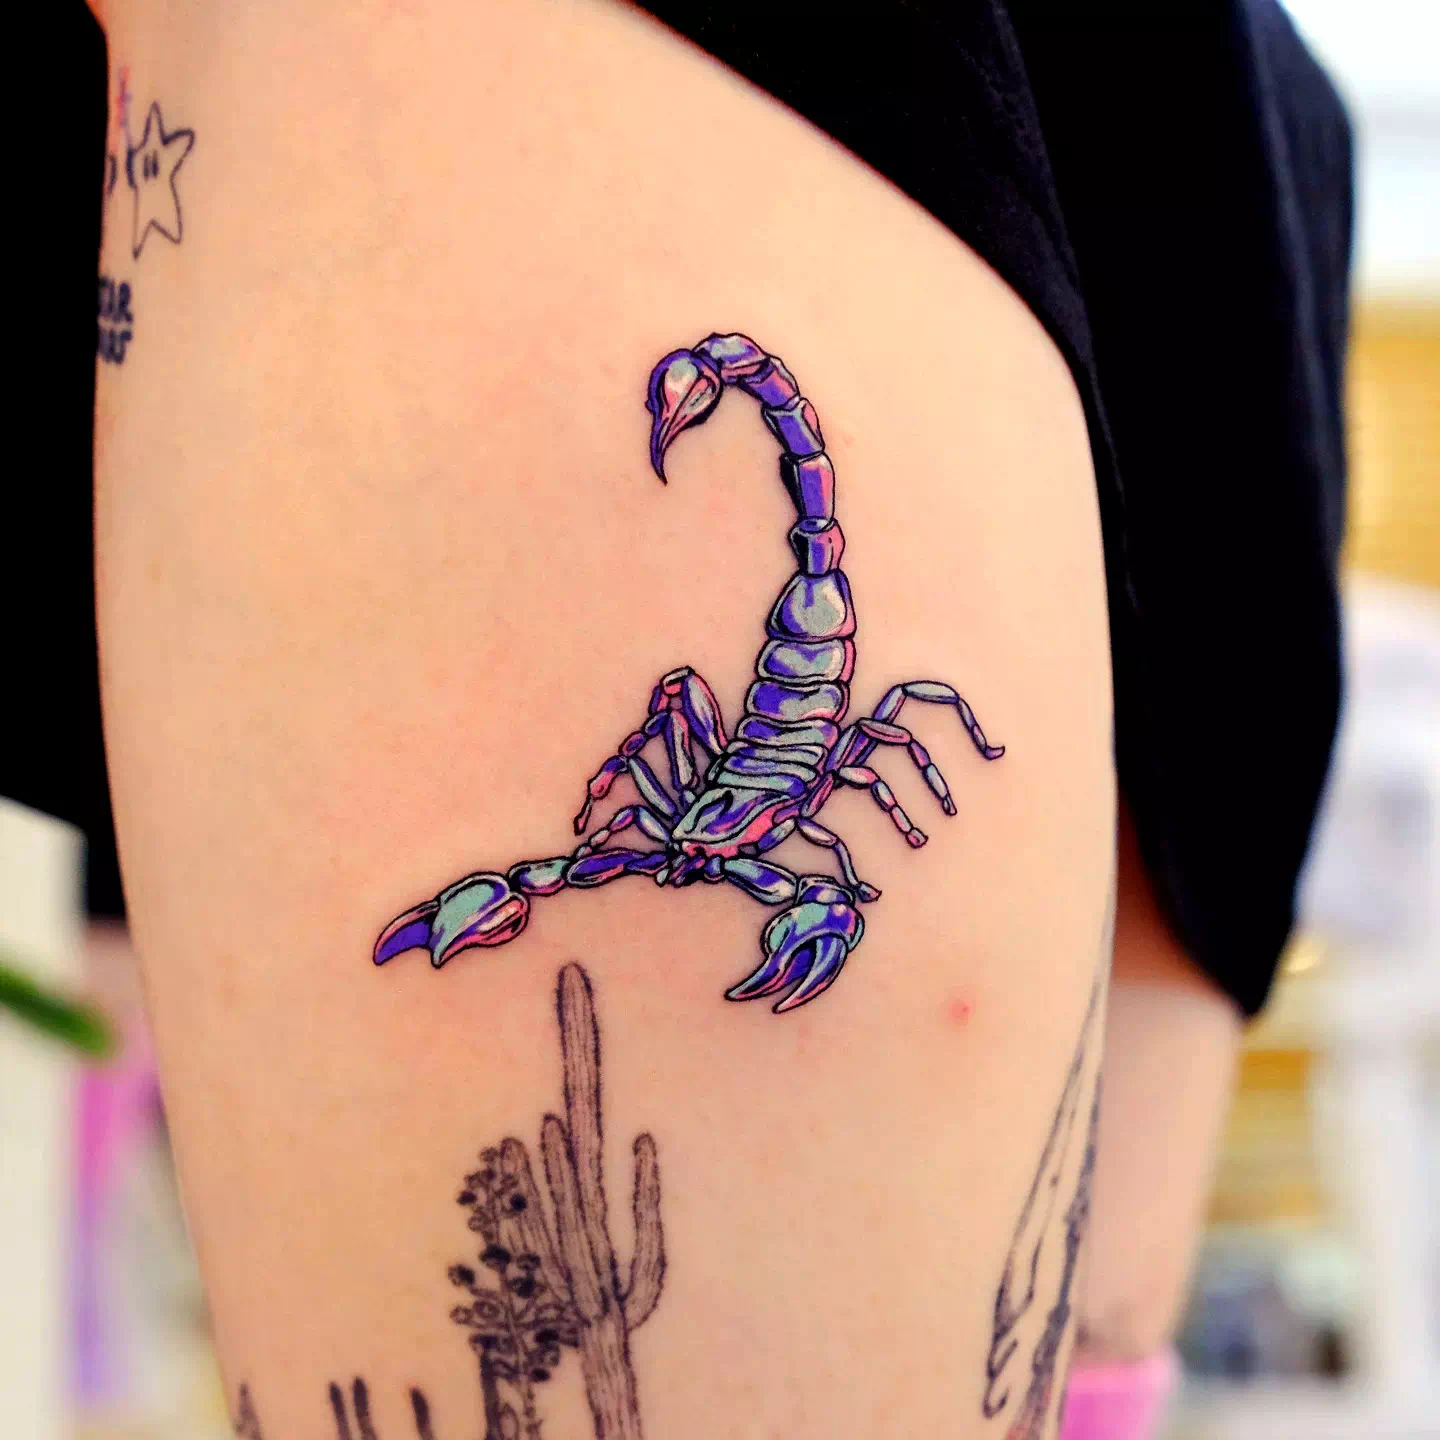 Top 10 Most famous Scorpion Tattoos Ideas For Men 2021 | New Tattoos |  Trakin 10 - YouTube